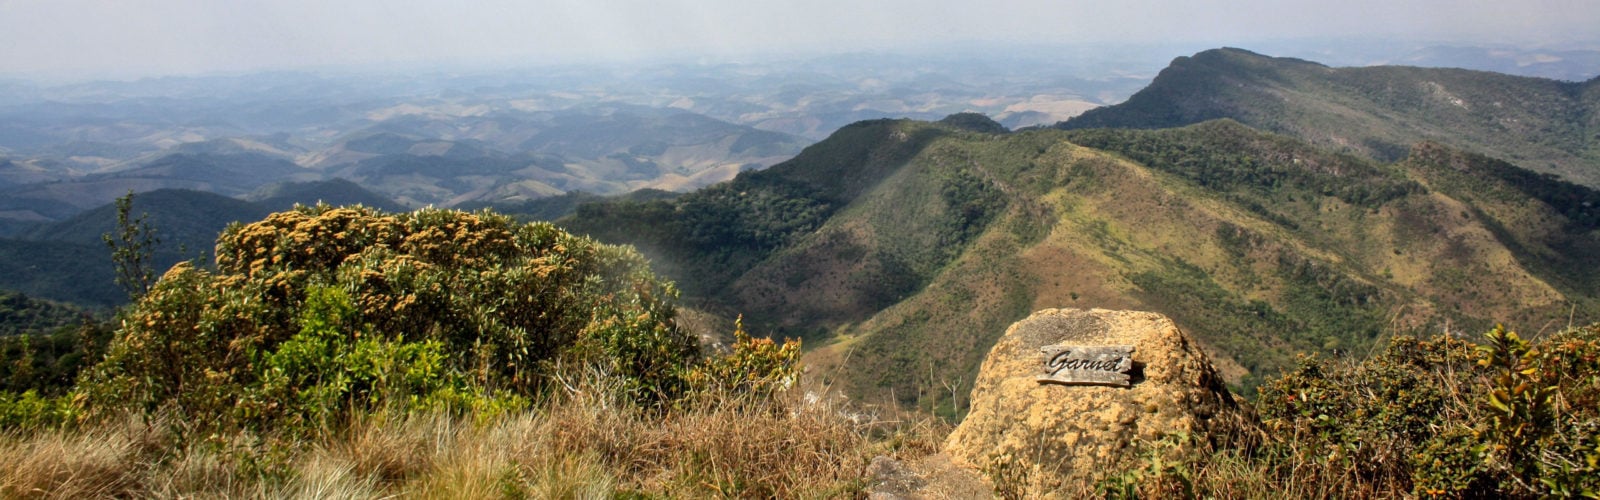 ibitipoca-landscape